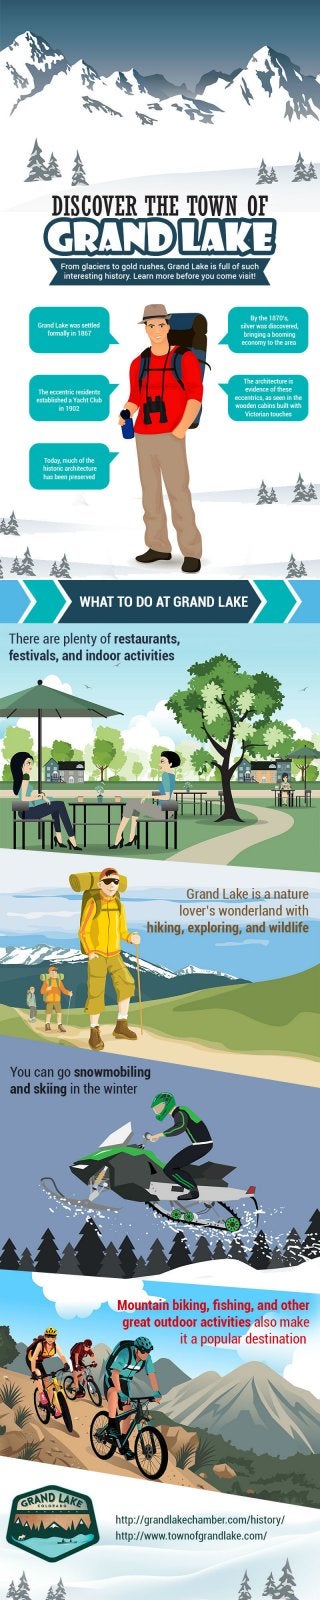 What to Do at Grand Lake?